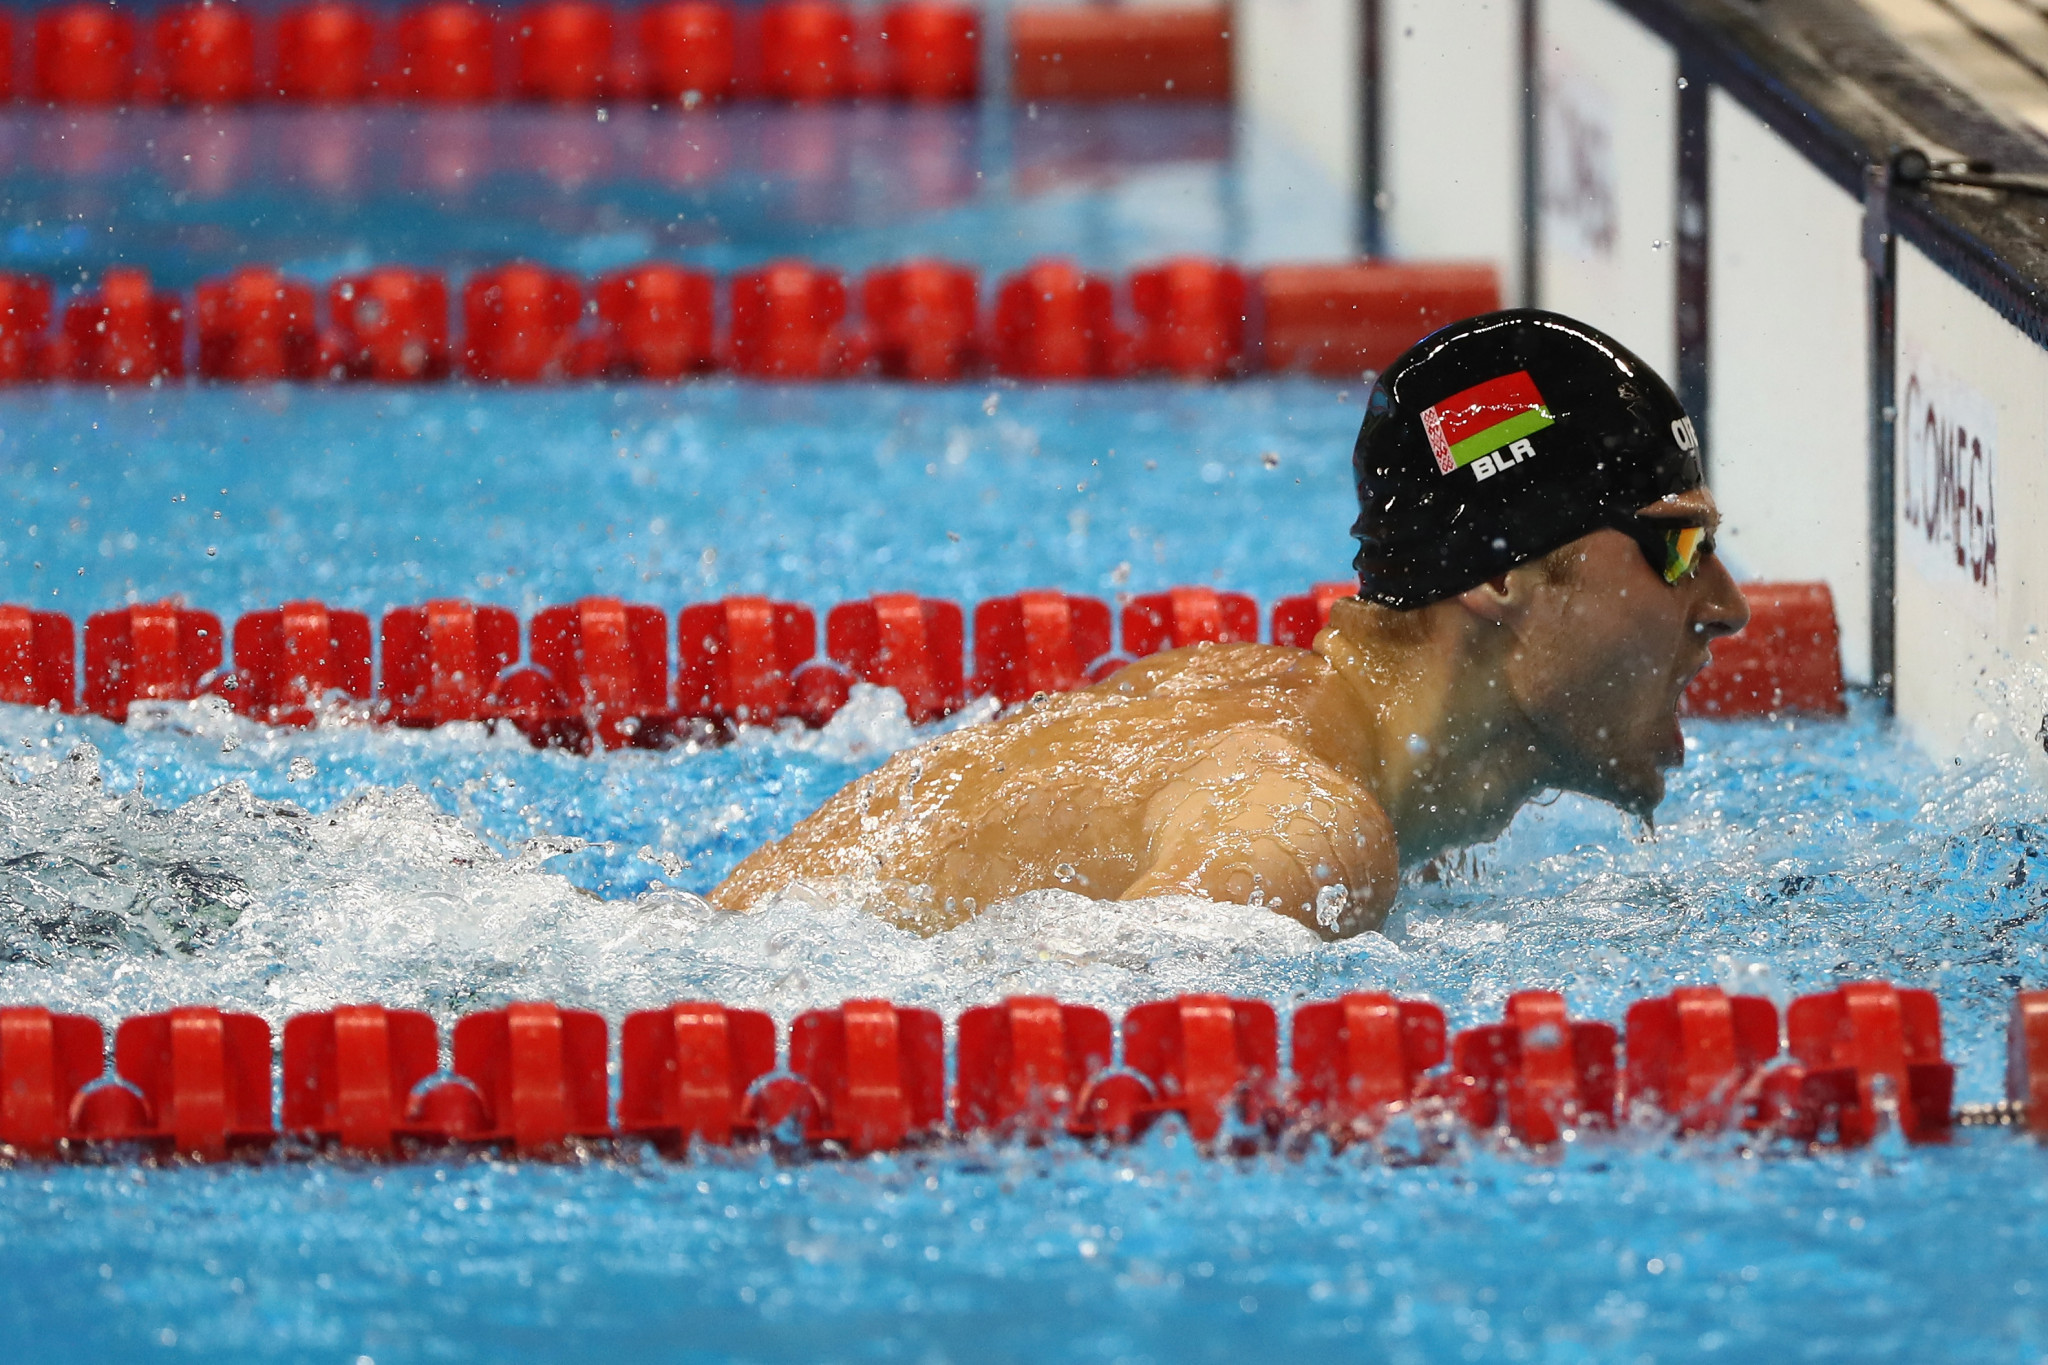 Bohi and Gilli break world records at World Para Swimming World Series finale